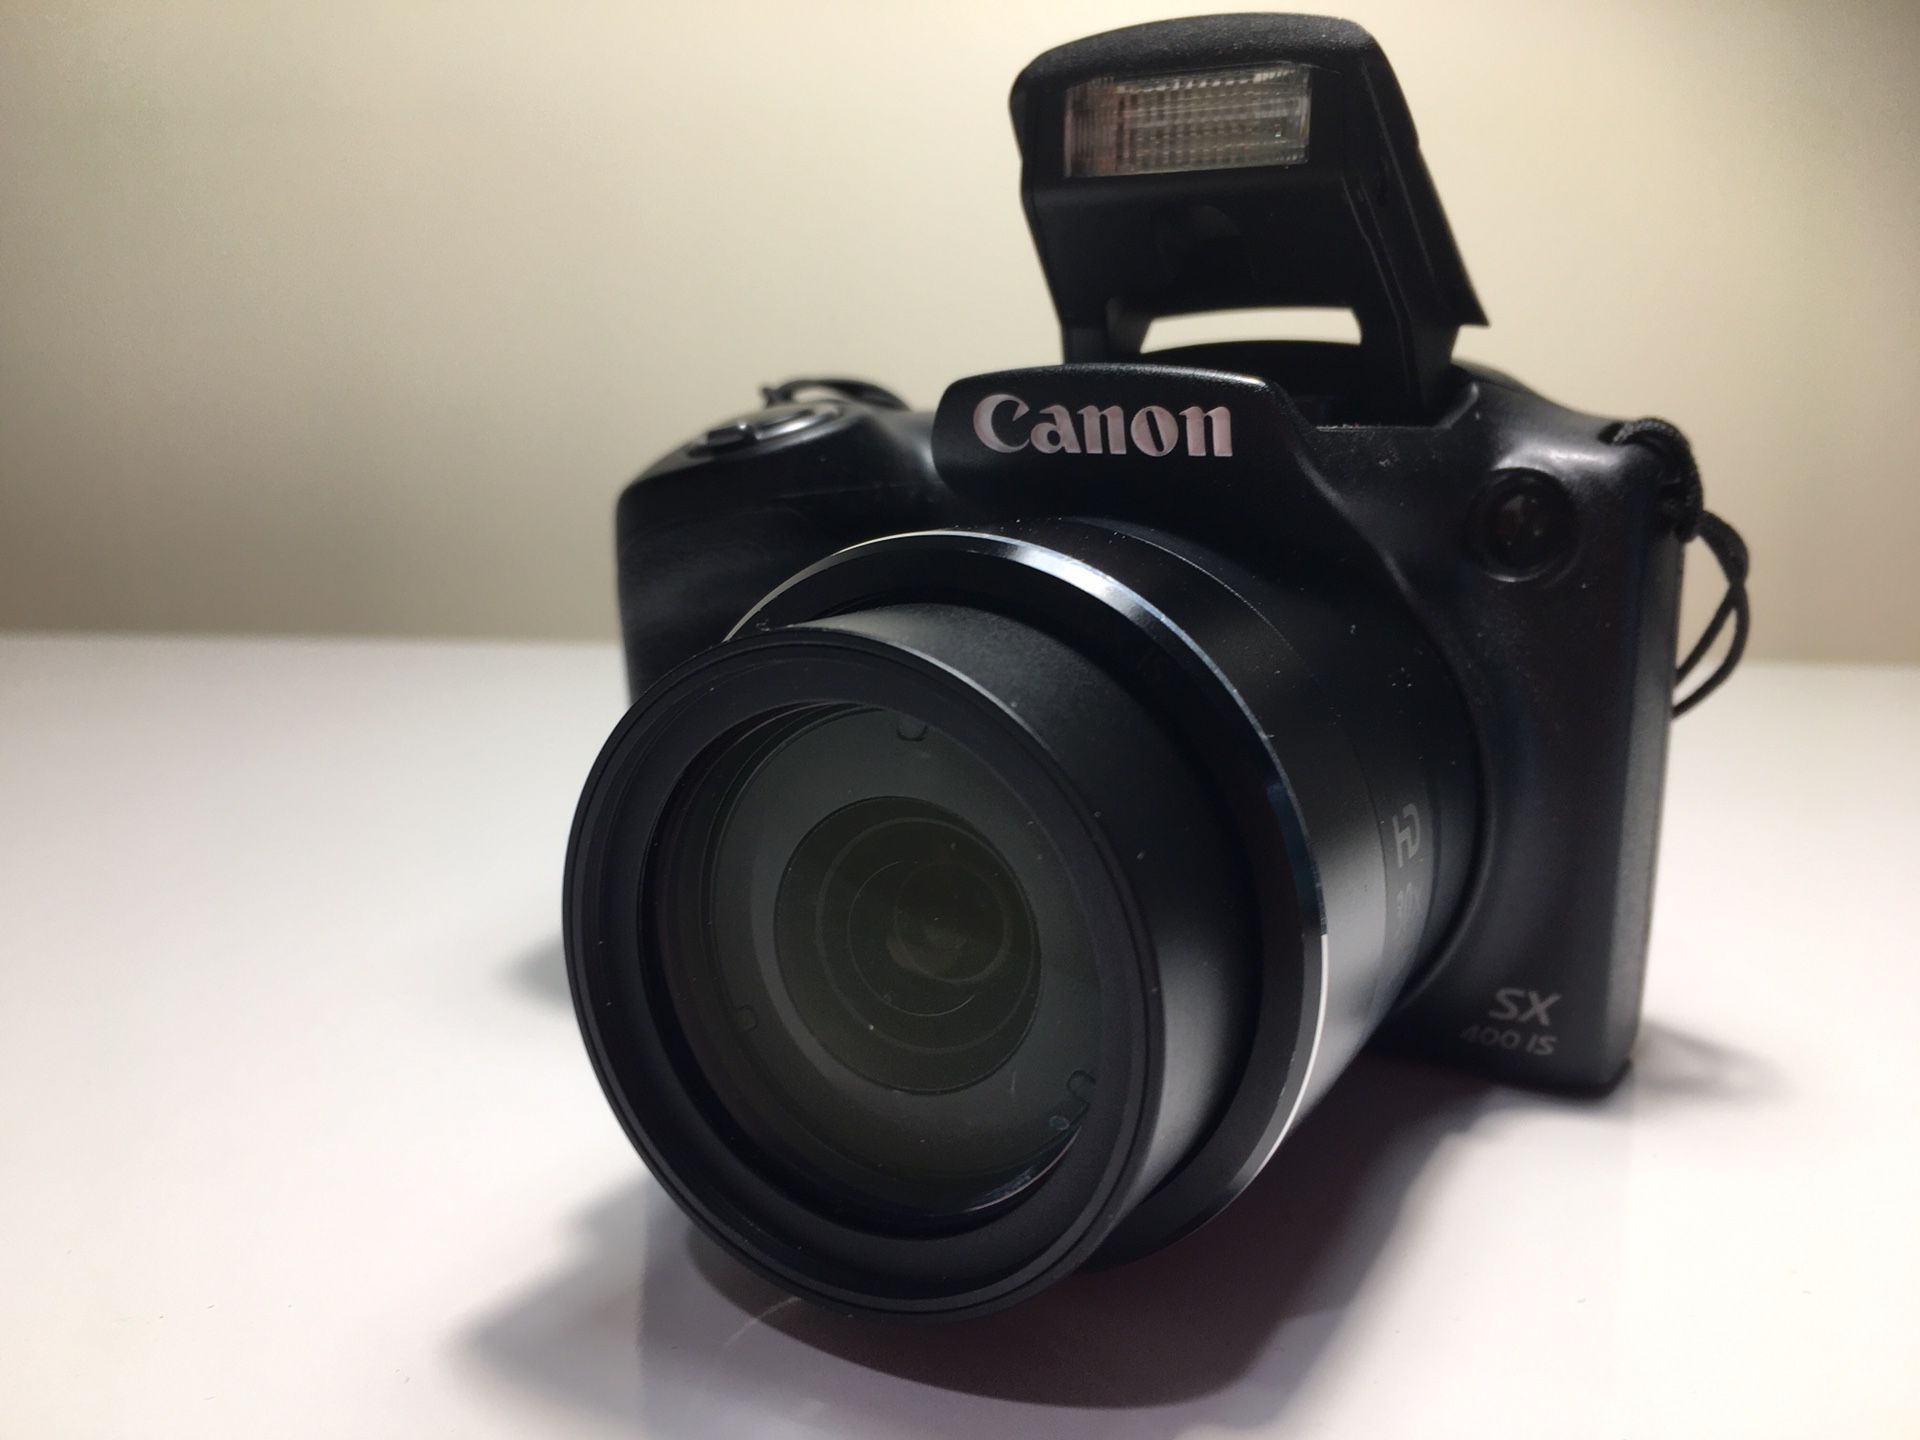 Canon SX400 IS PowerShot camera